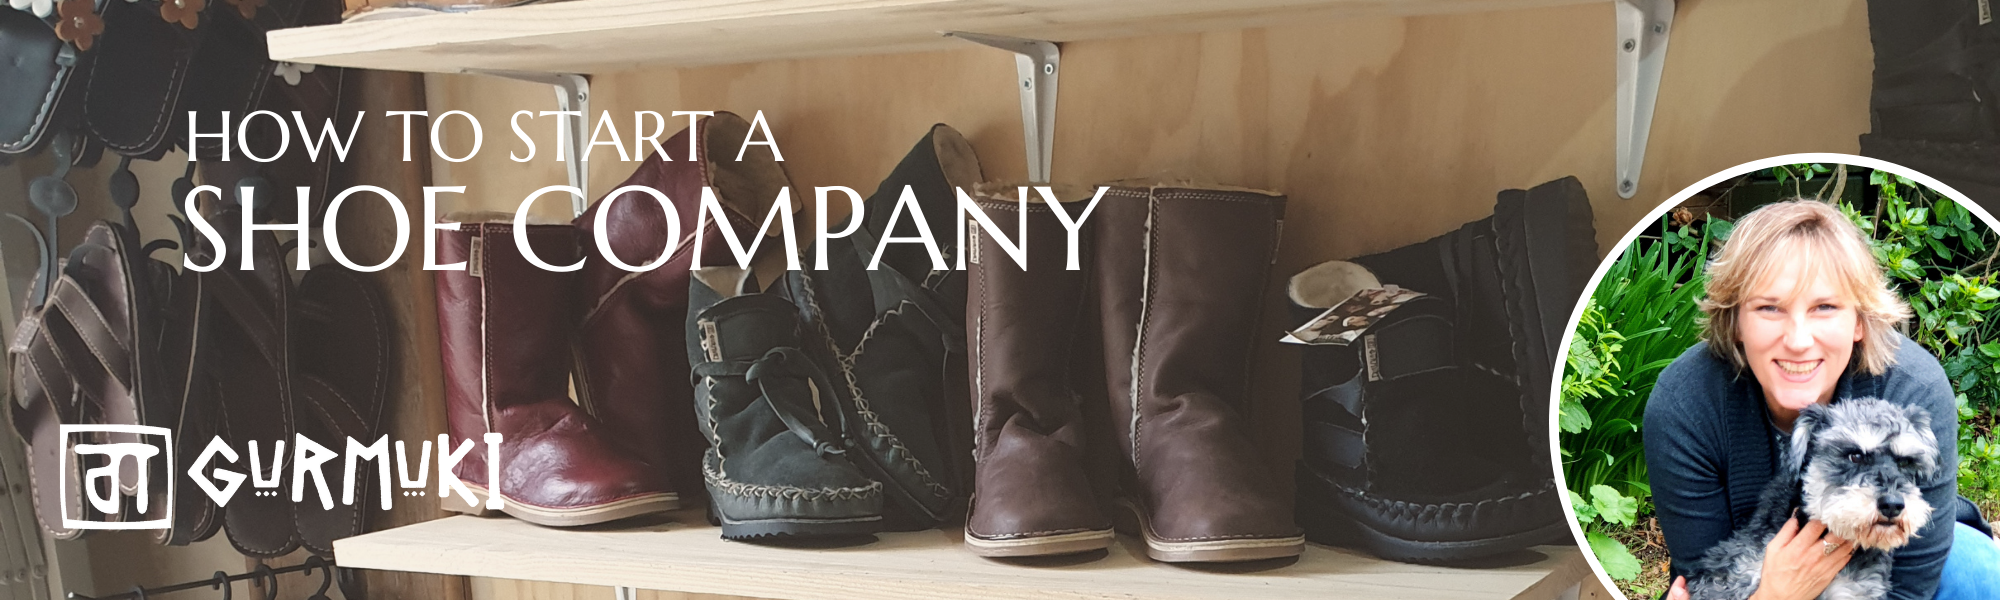 How to start a Shoe Company